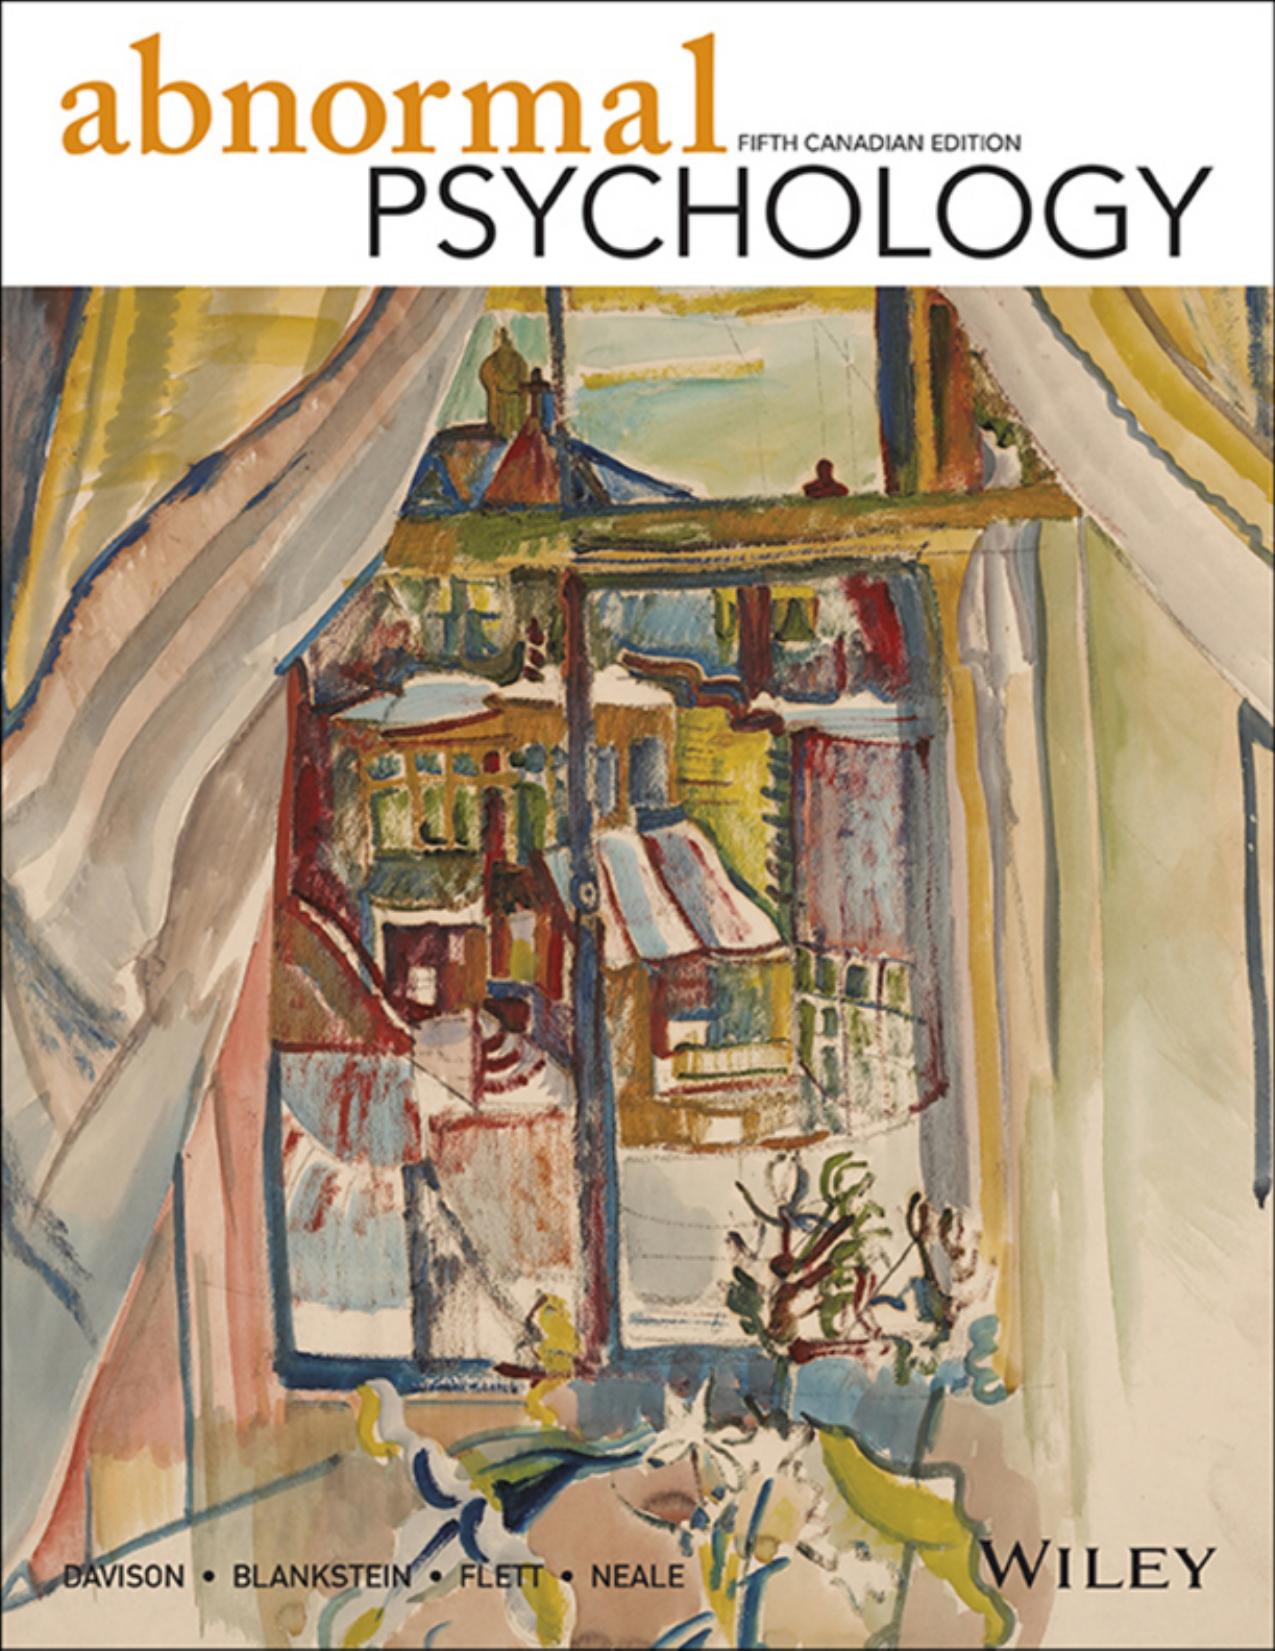 Abnormal Psychology, 5th Canadian Edition by John NealeGerald DavisonKirk BlanksteinGordon Flett